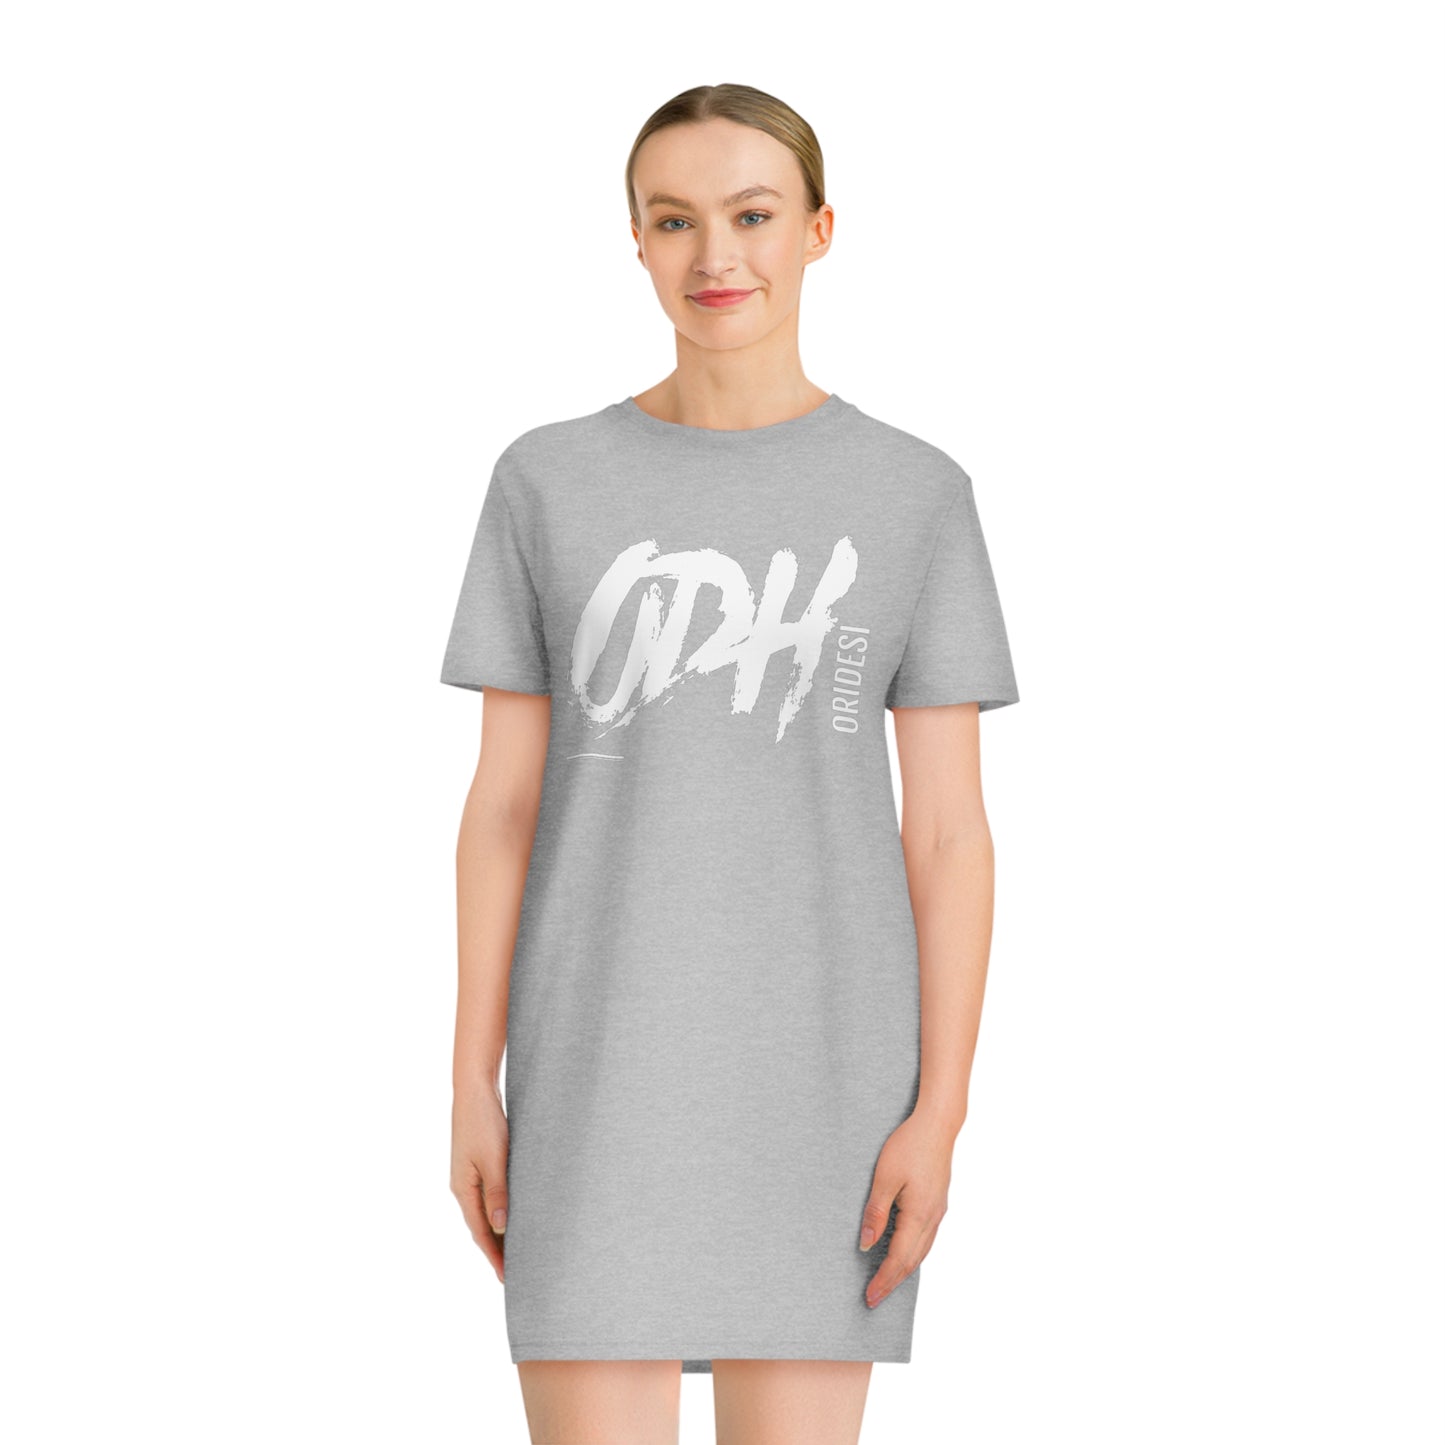 ODH Spinner T-Shirt Dress Night Shirt